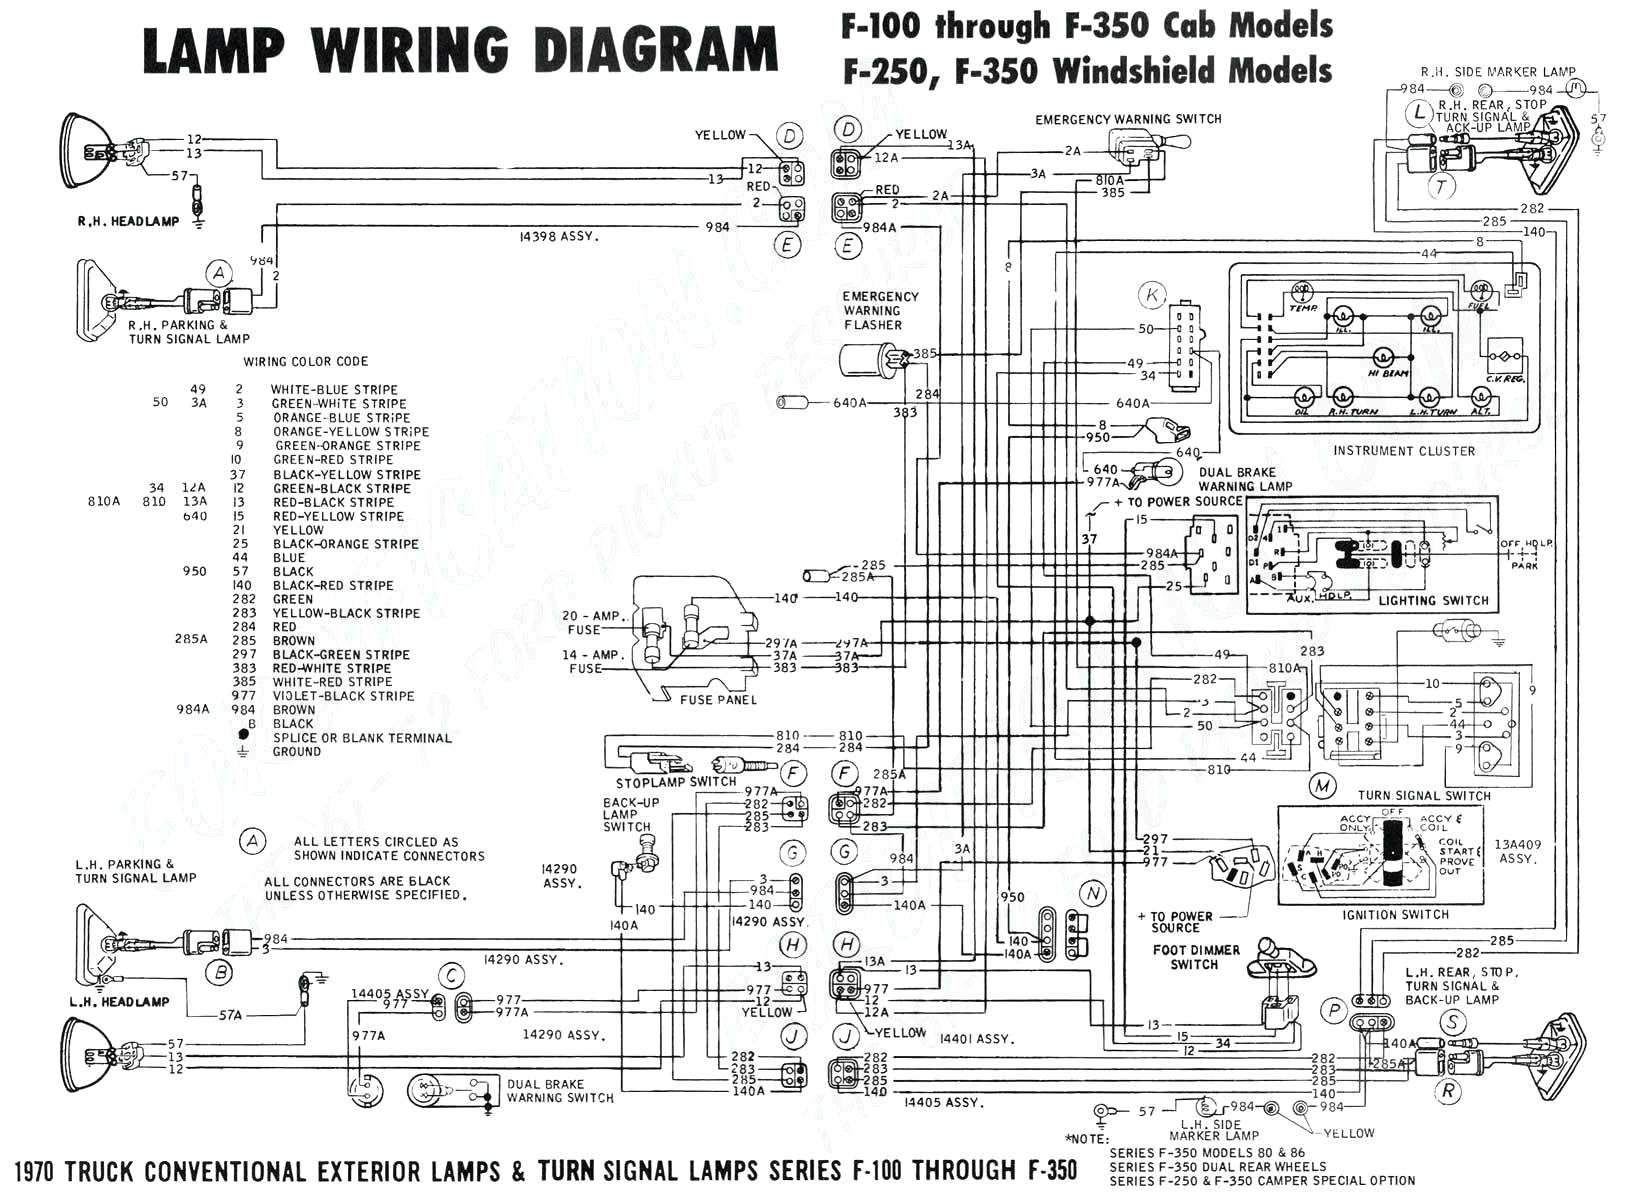 Audi Tt Wiring Diagram Pdf 2000 Audi Tt Fuse Diagram On Harley Davidson Throttle Cable Diagram